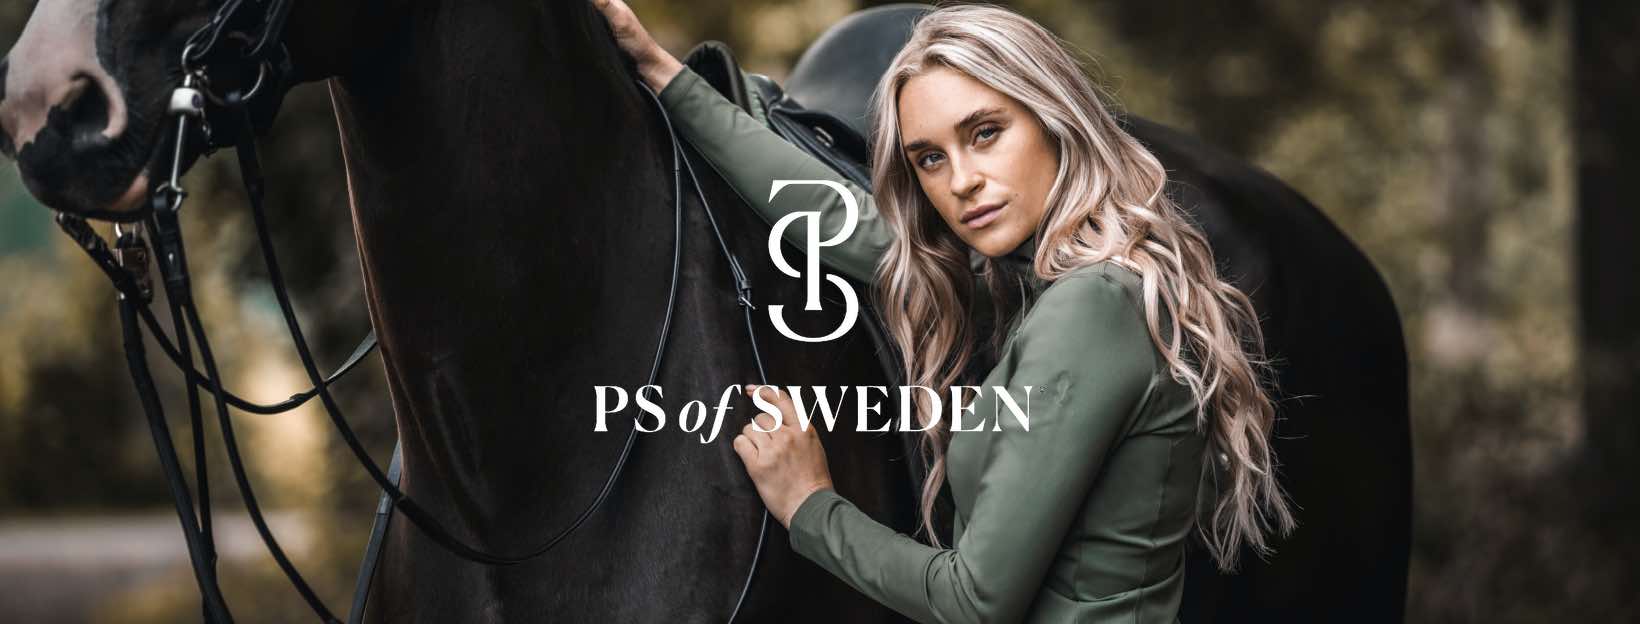 ps of sweden banner